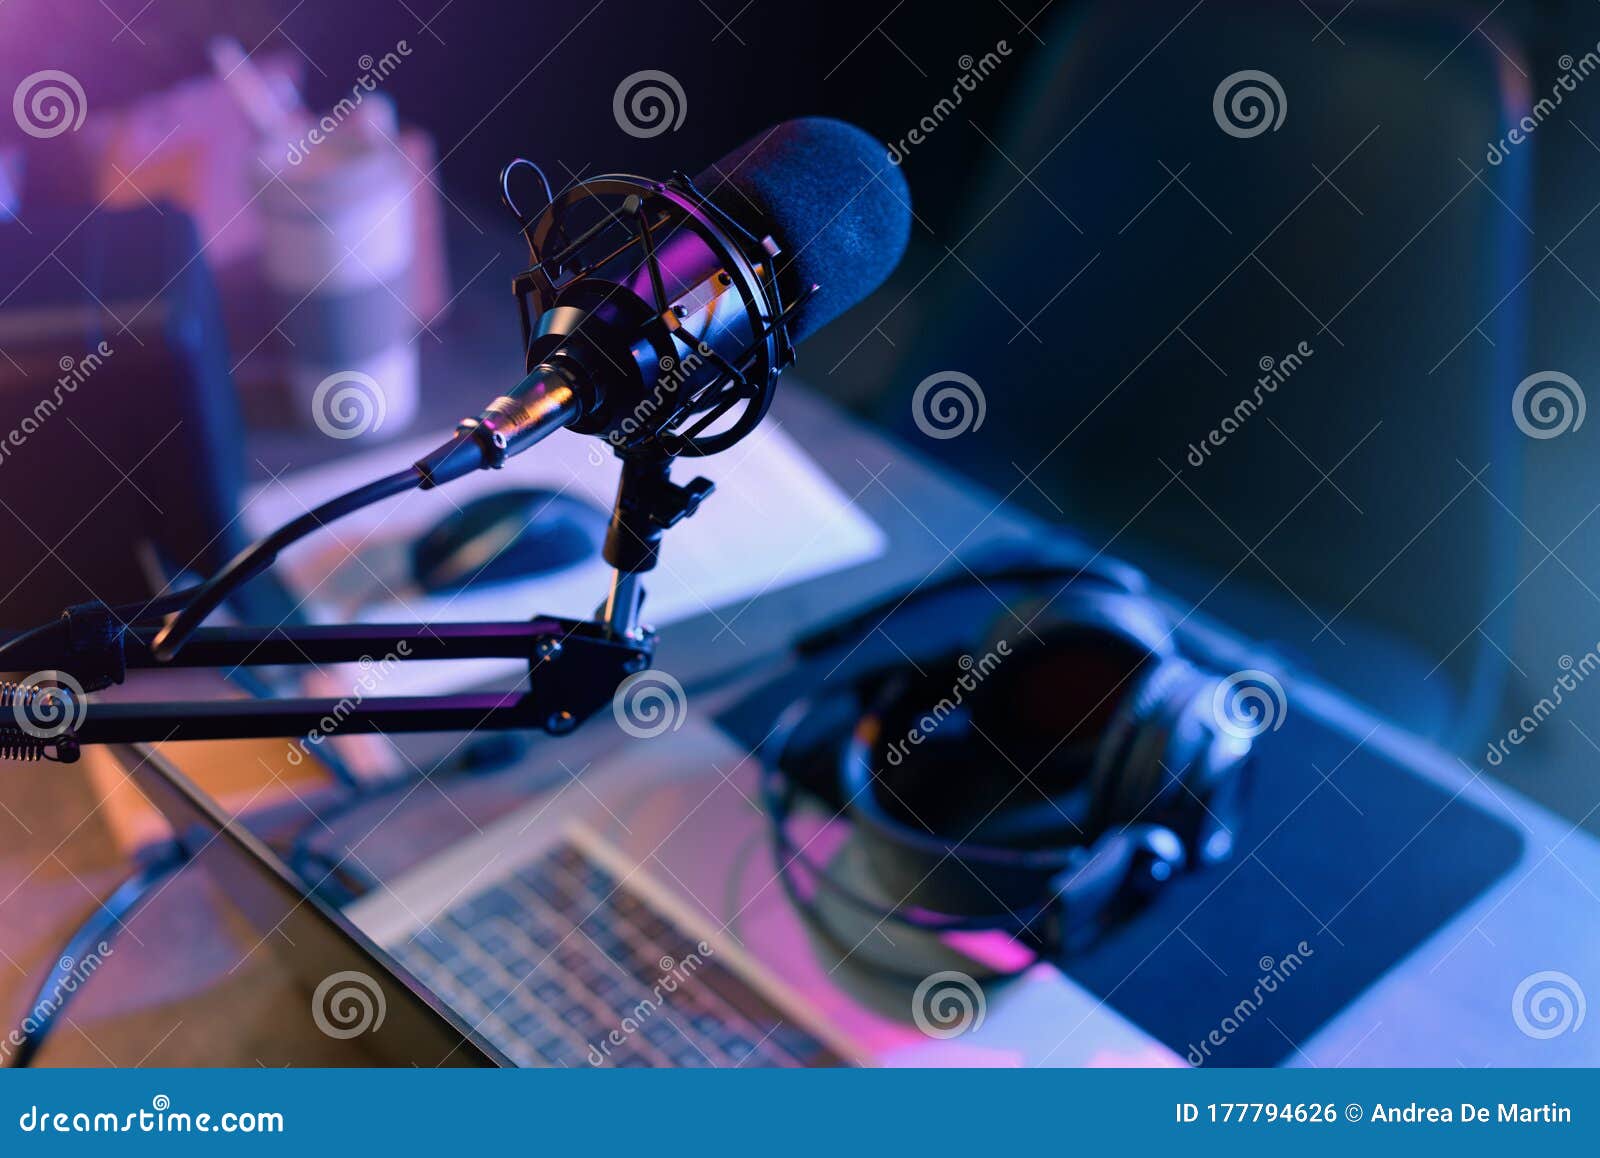 online live radio studio desk